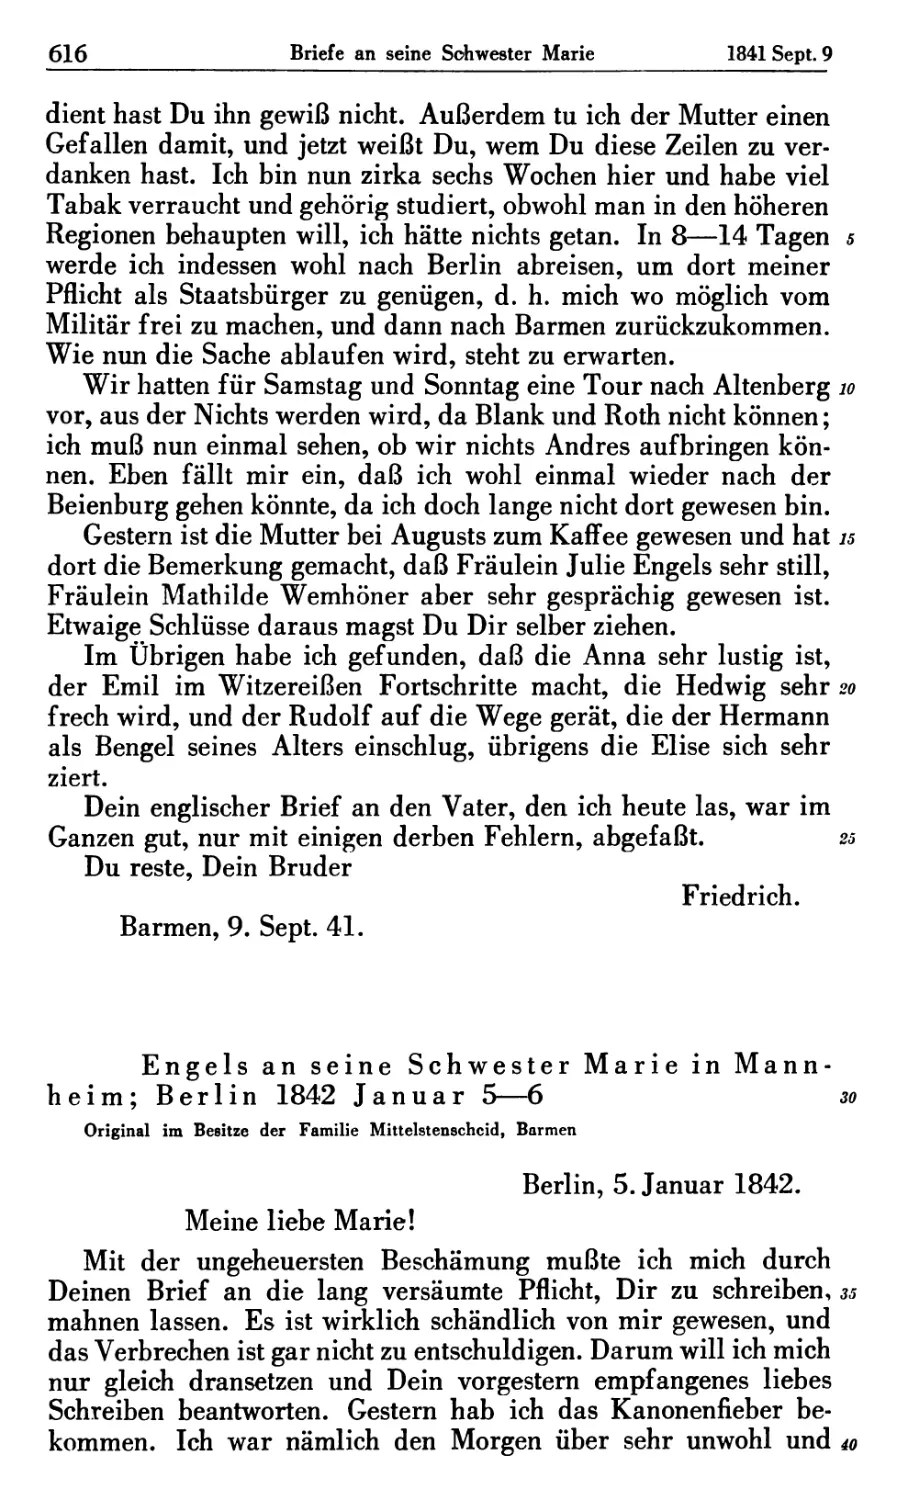 Engels an seine Schwester Marie in Mannheim; Berlin 1842 Januar 5—6